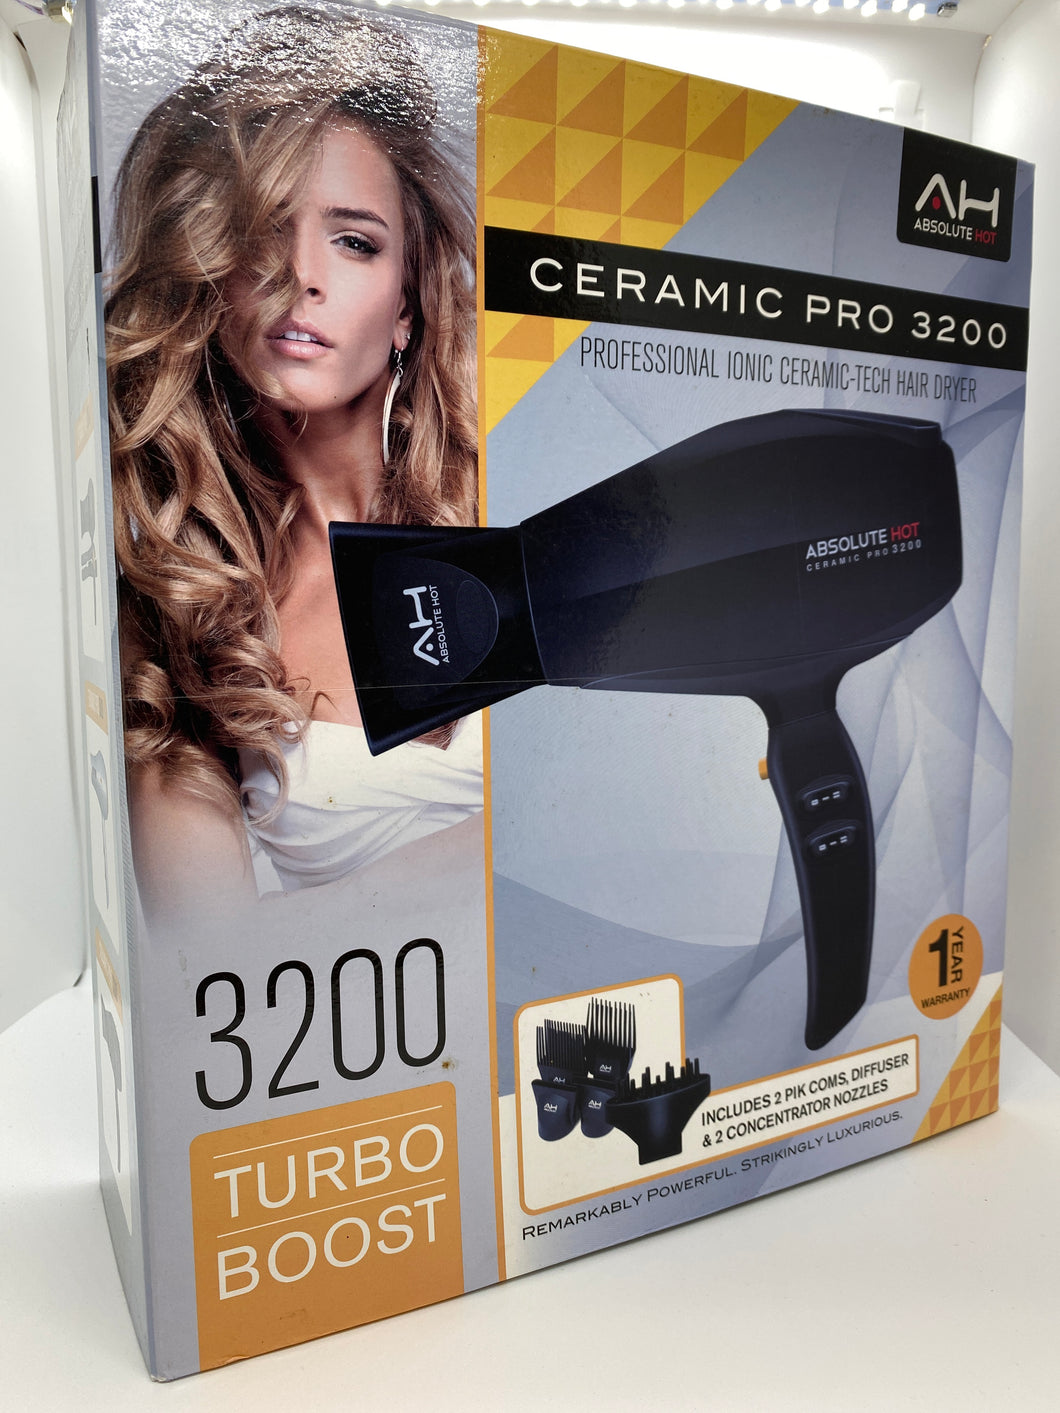 AH Ceramic Pro 3200 Professional Ionic Ceramic Tech Hair Dryer